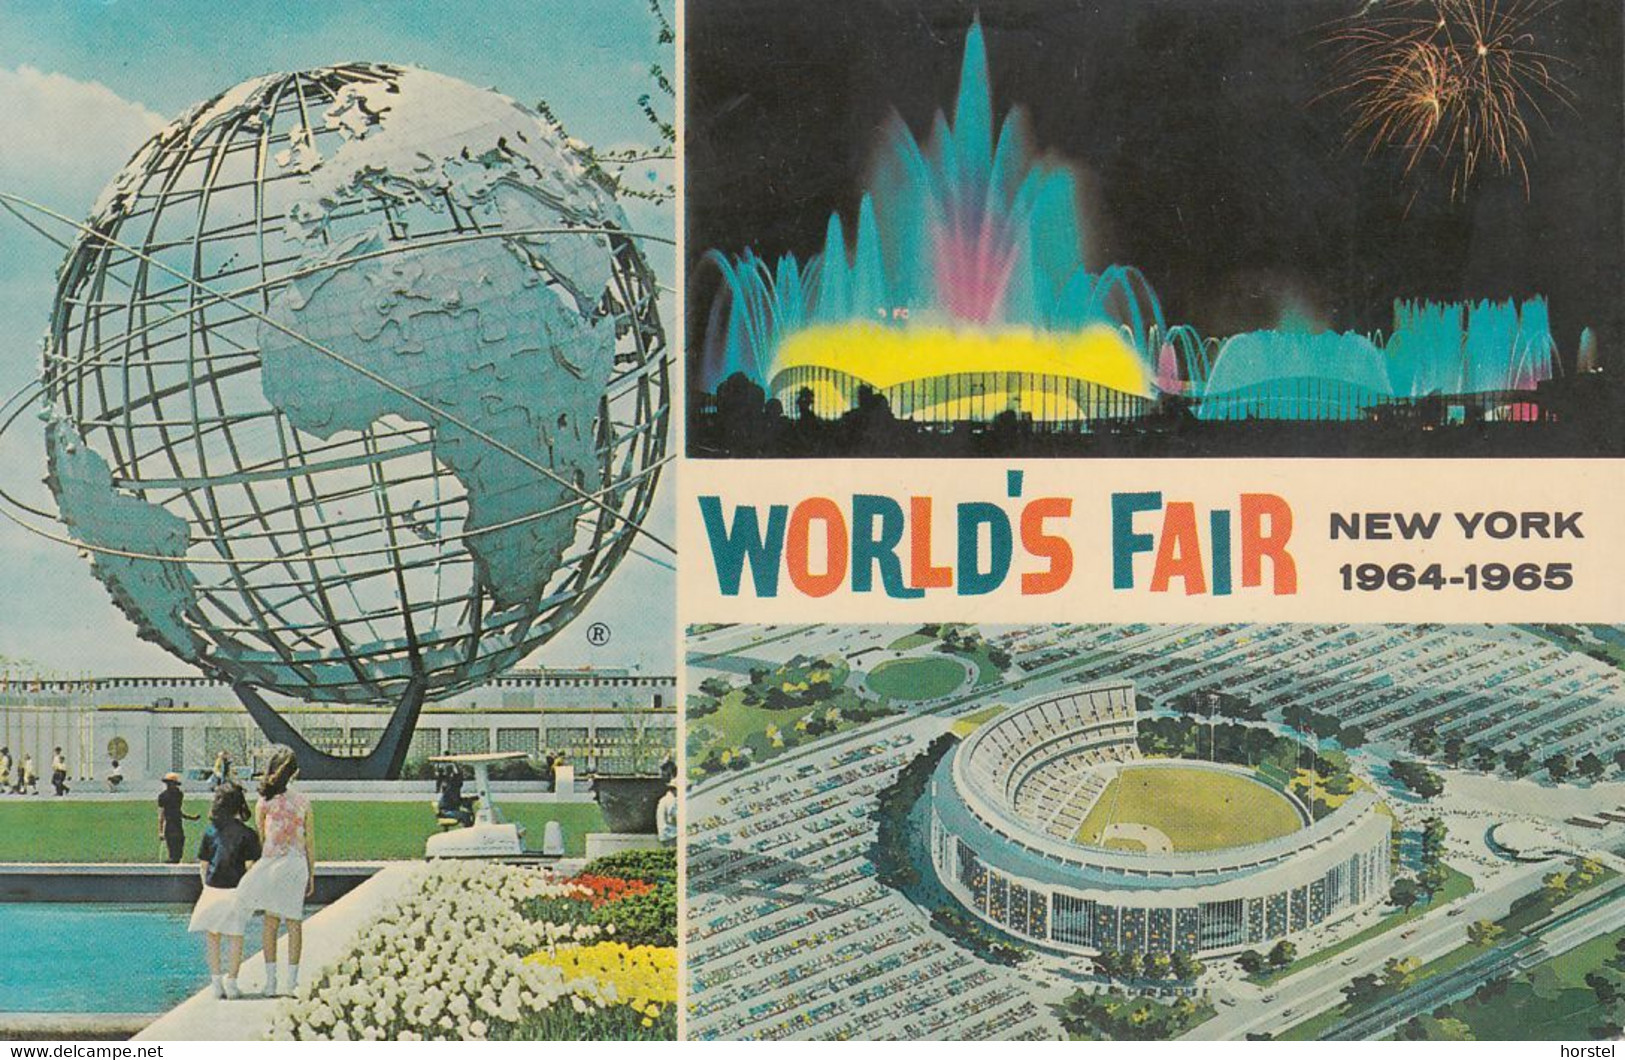 USA - New York - World's Fair - 1964-1965 - Views - Shea Stadium - Fontain - Long Island